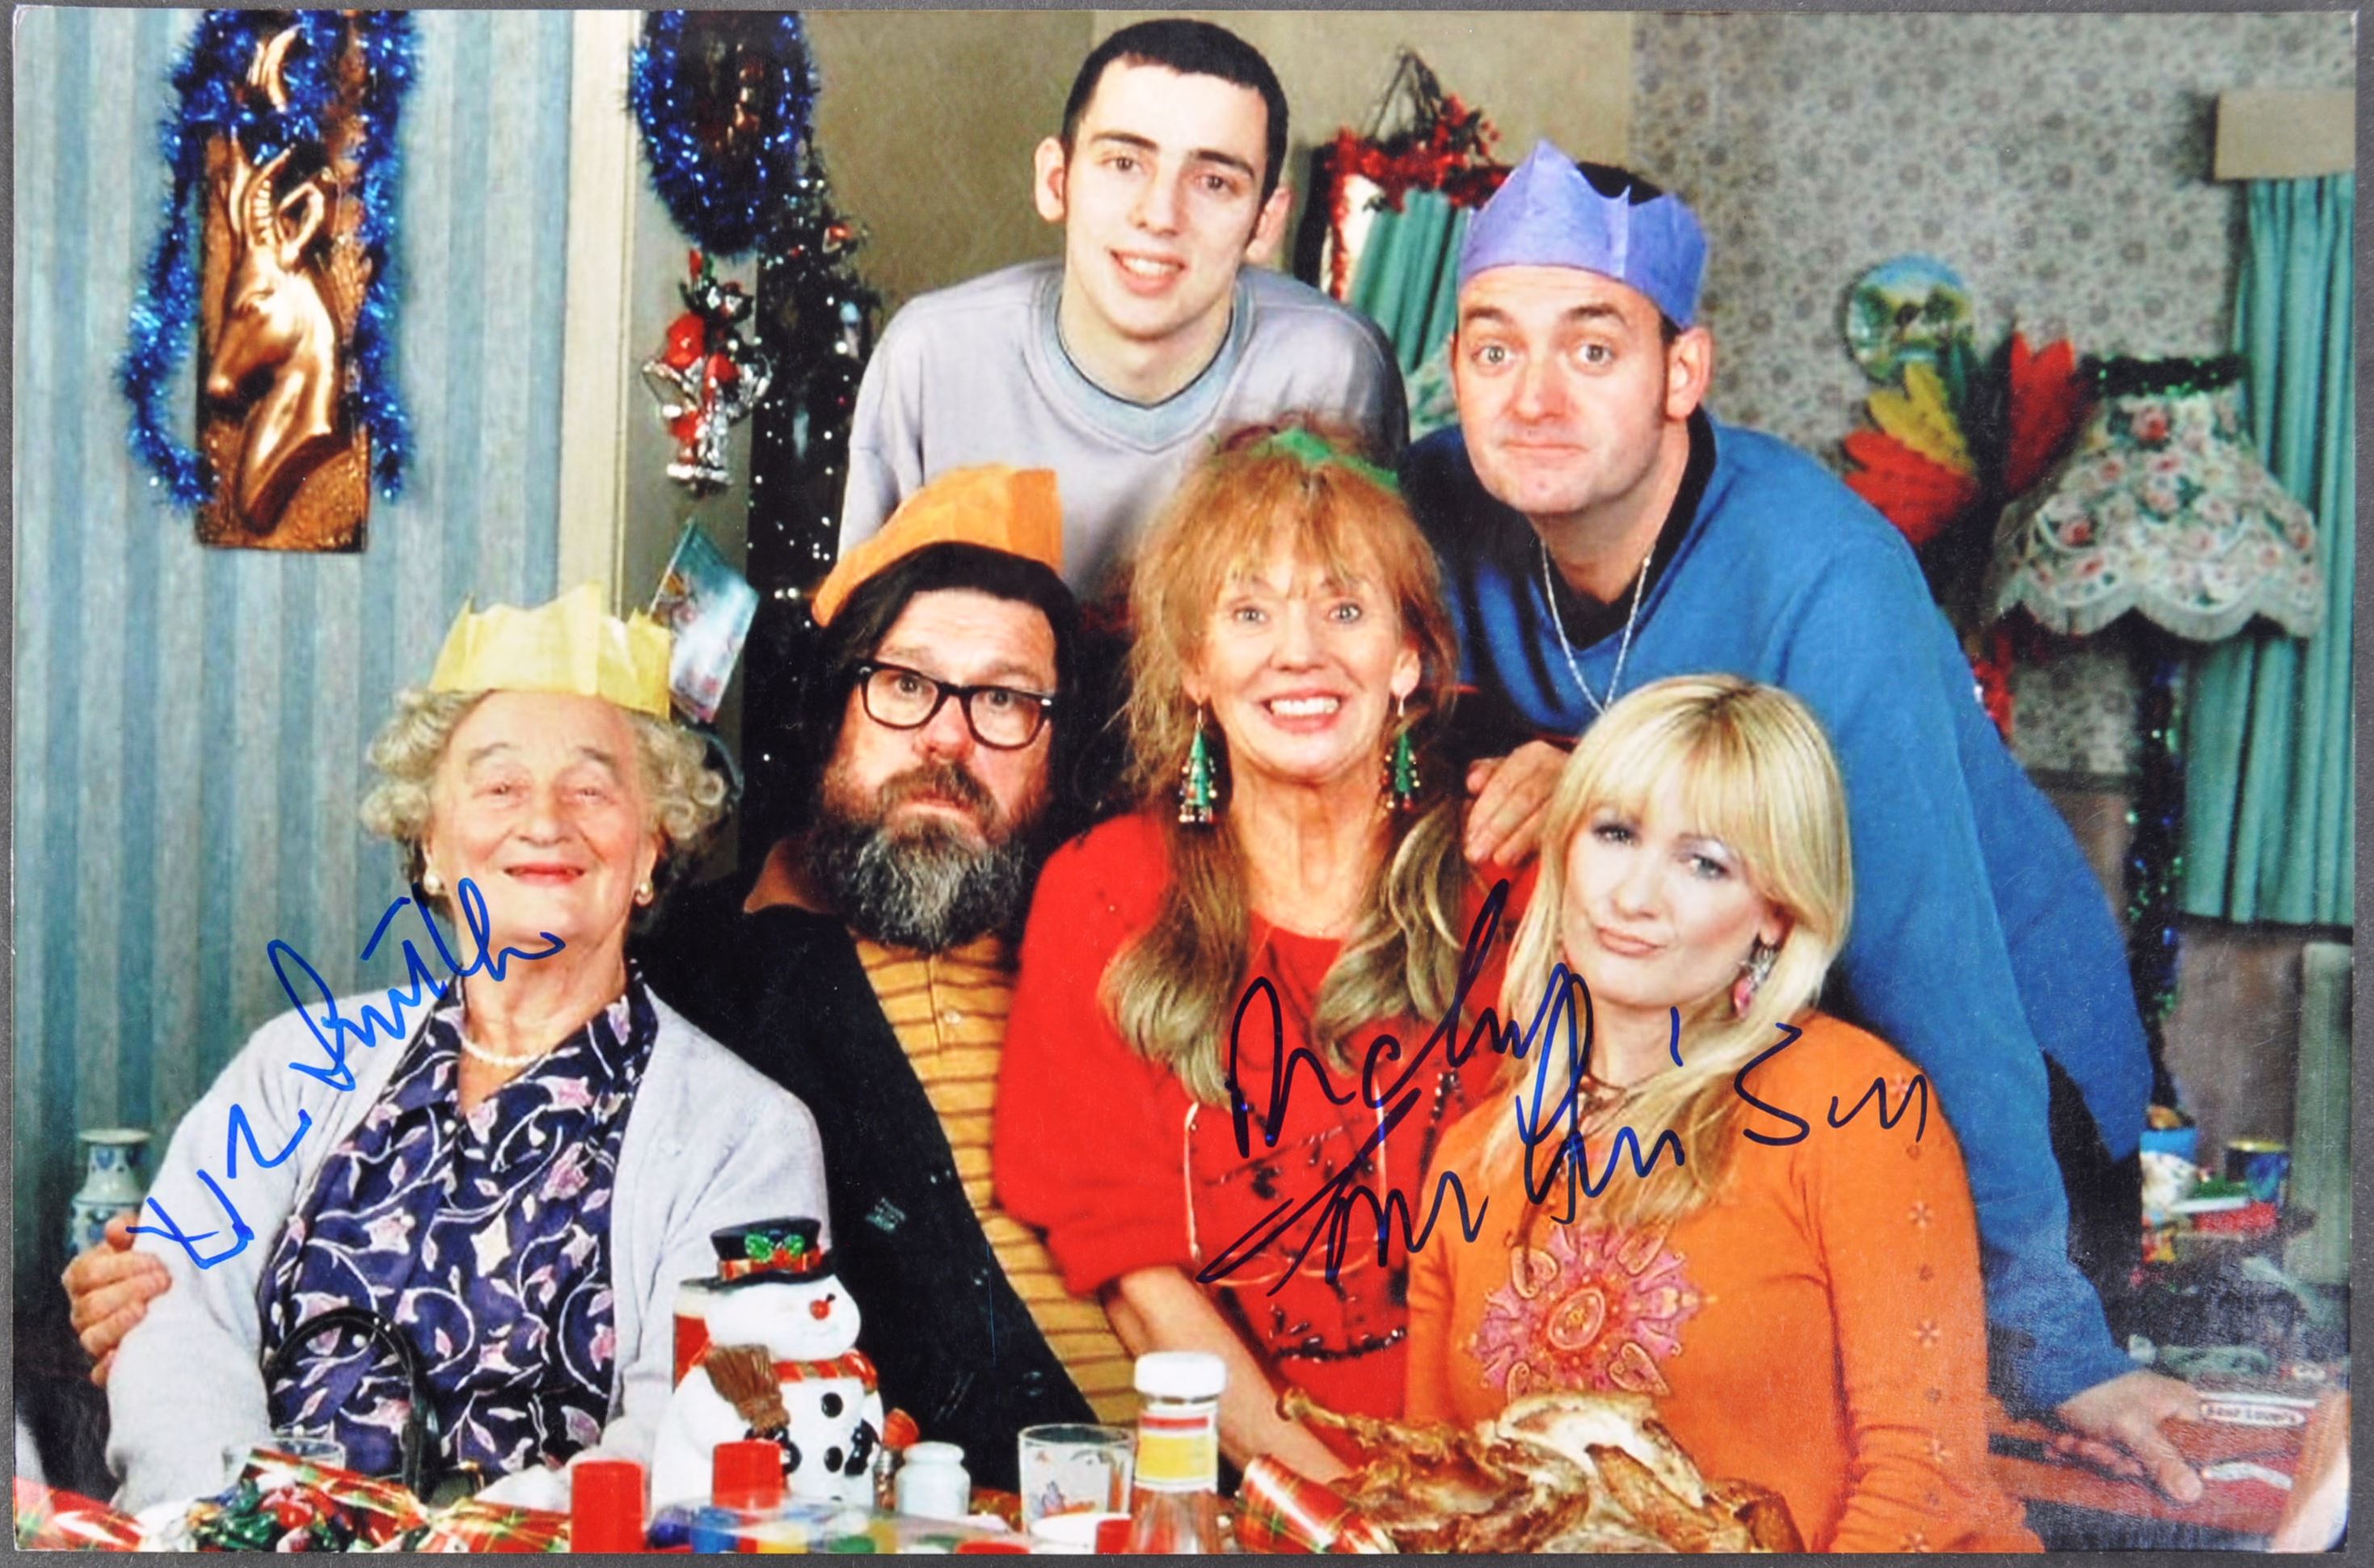 THE ROYLE FAMILY - BBC SITCOM - DUAL SIGNED 8X12" PHOTO